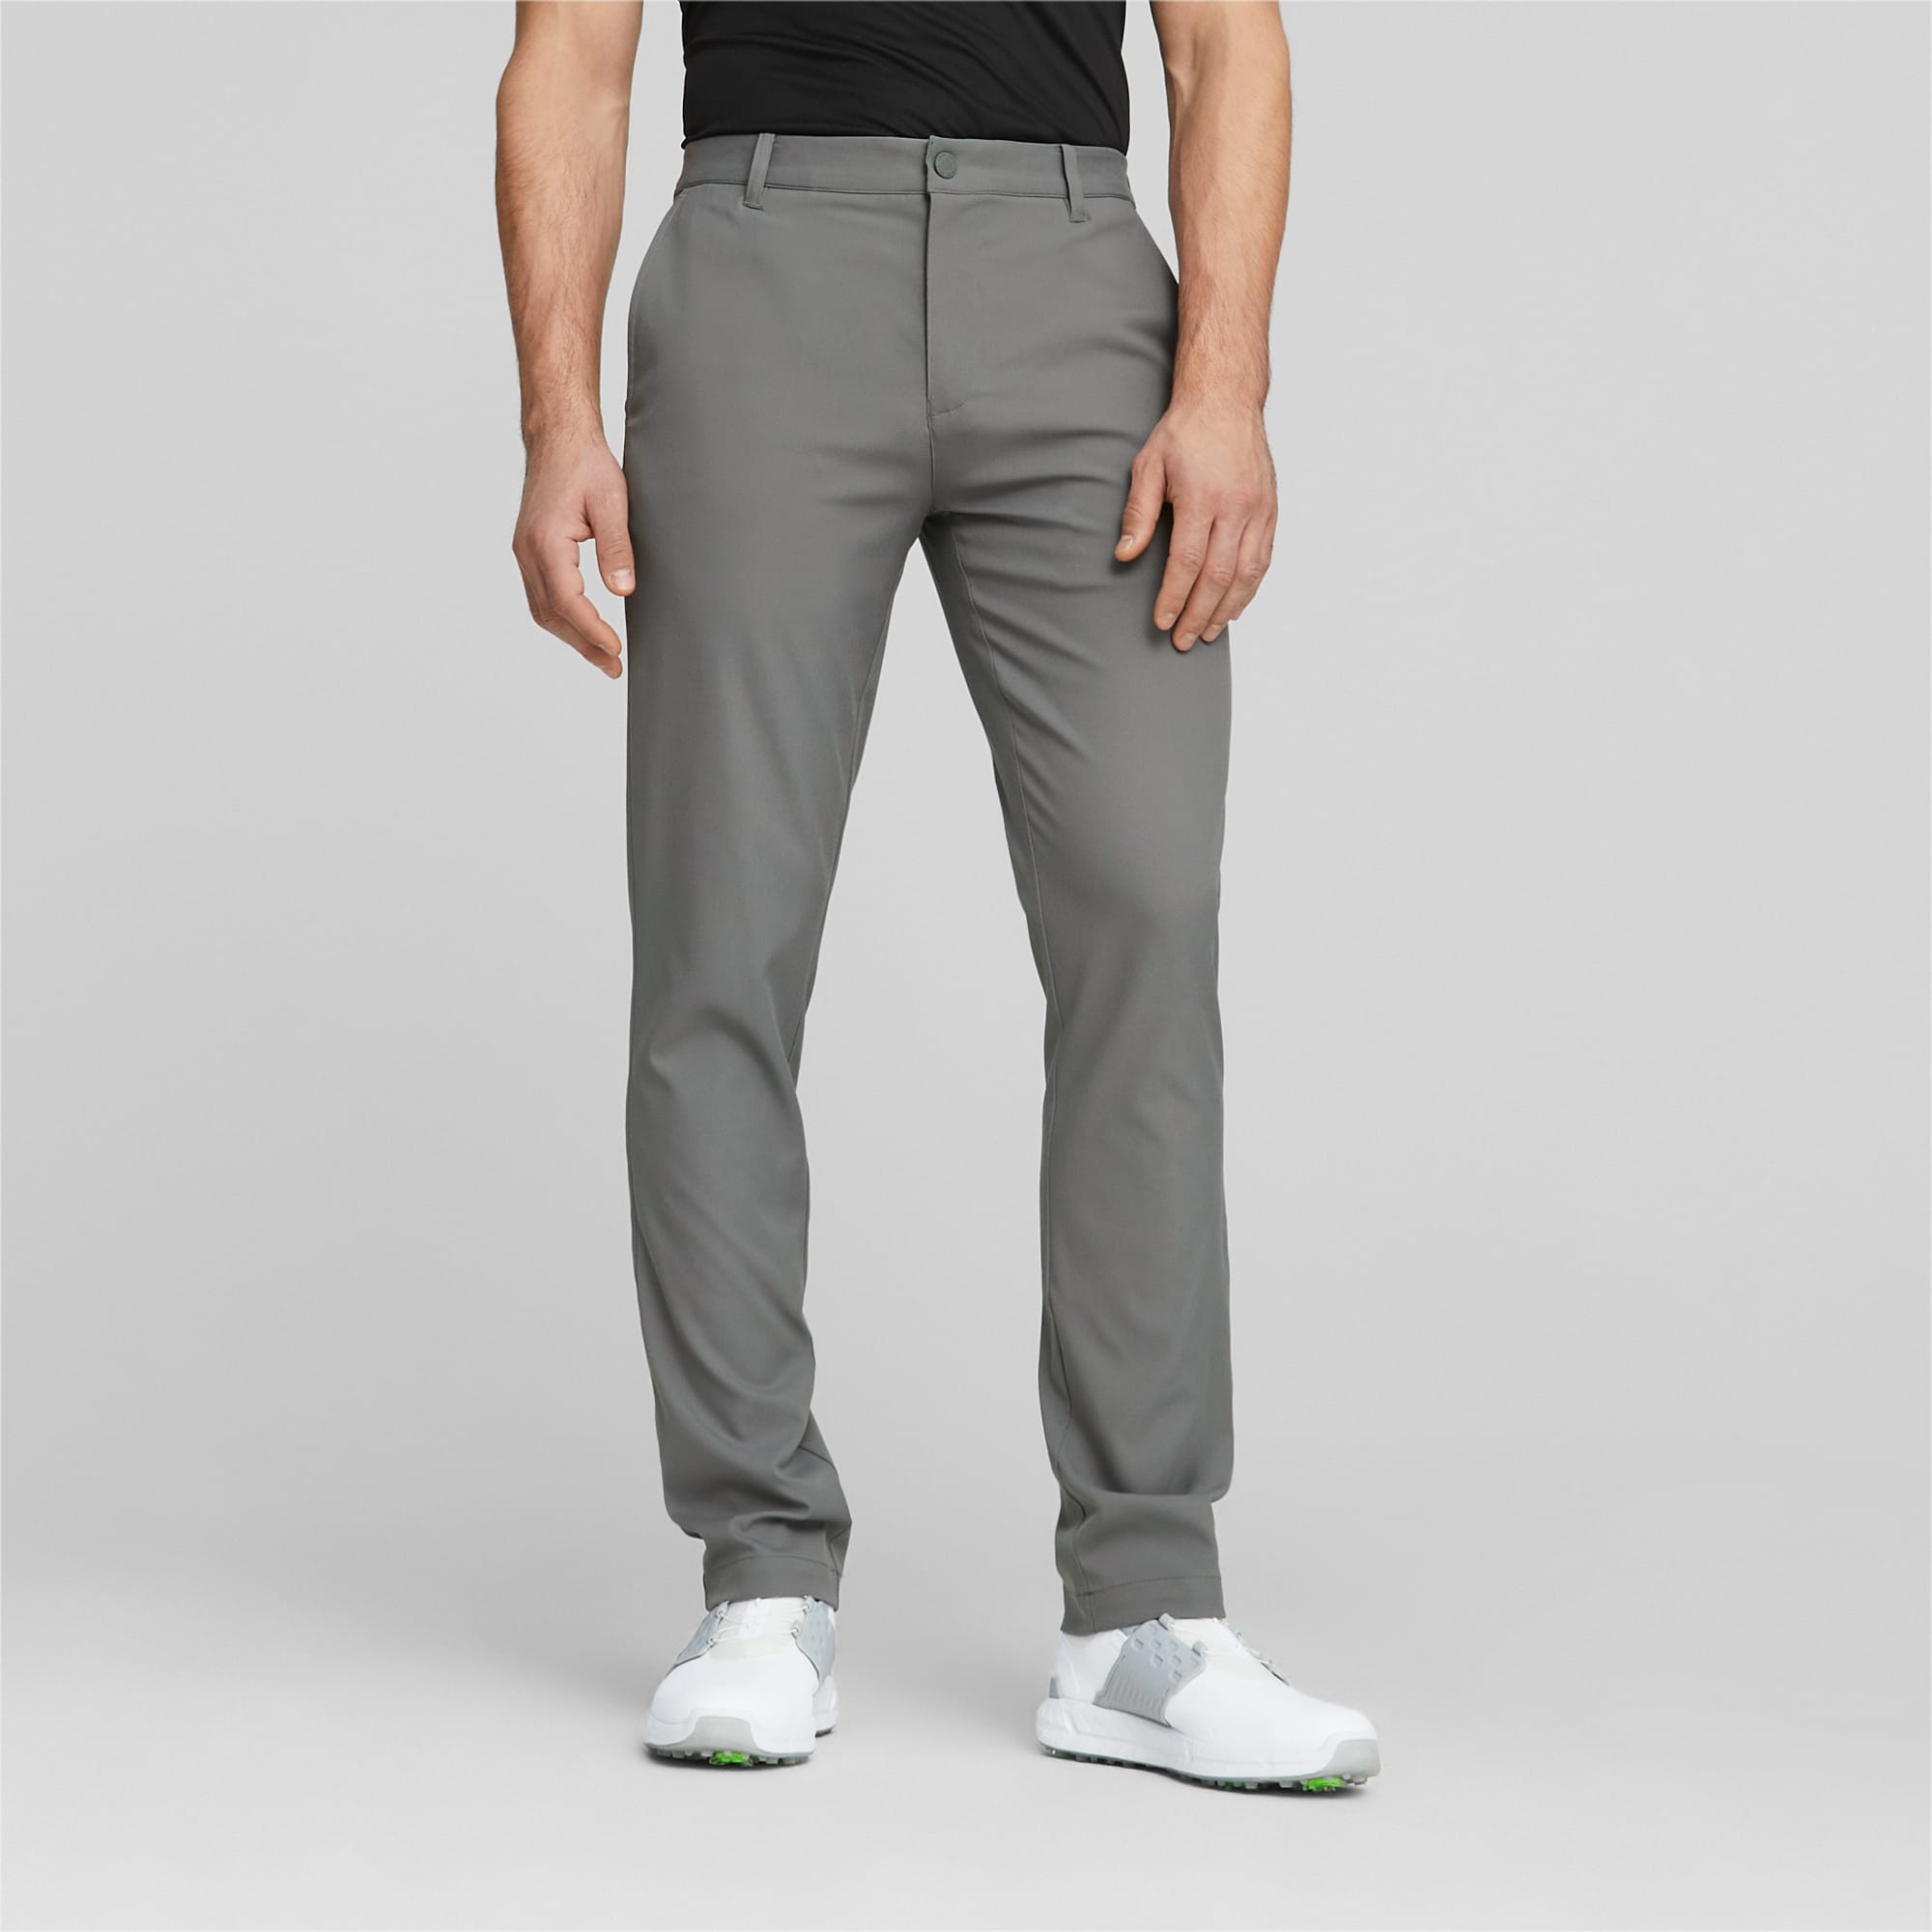 PUMA Dealer Tailored Golf Pants Men, Slate Sky, Size 36/36, Clothing